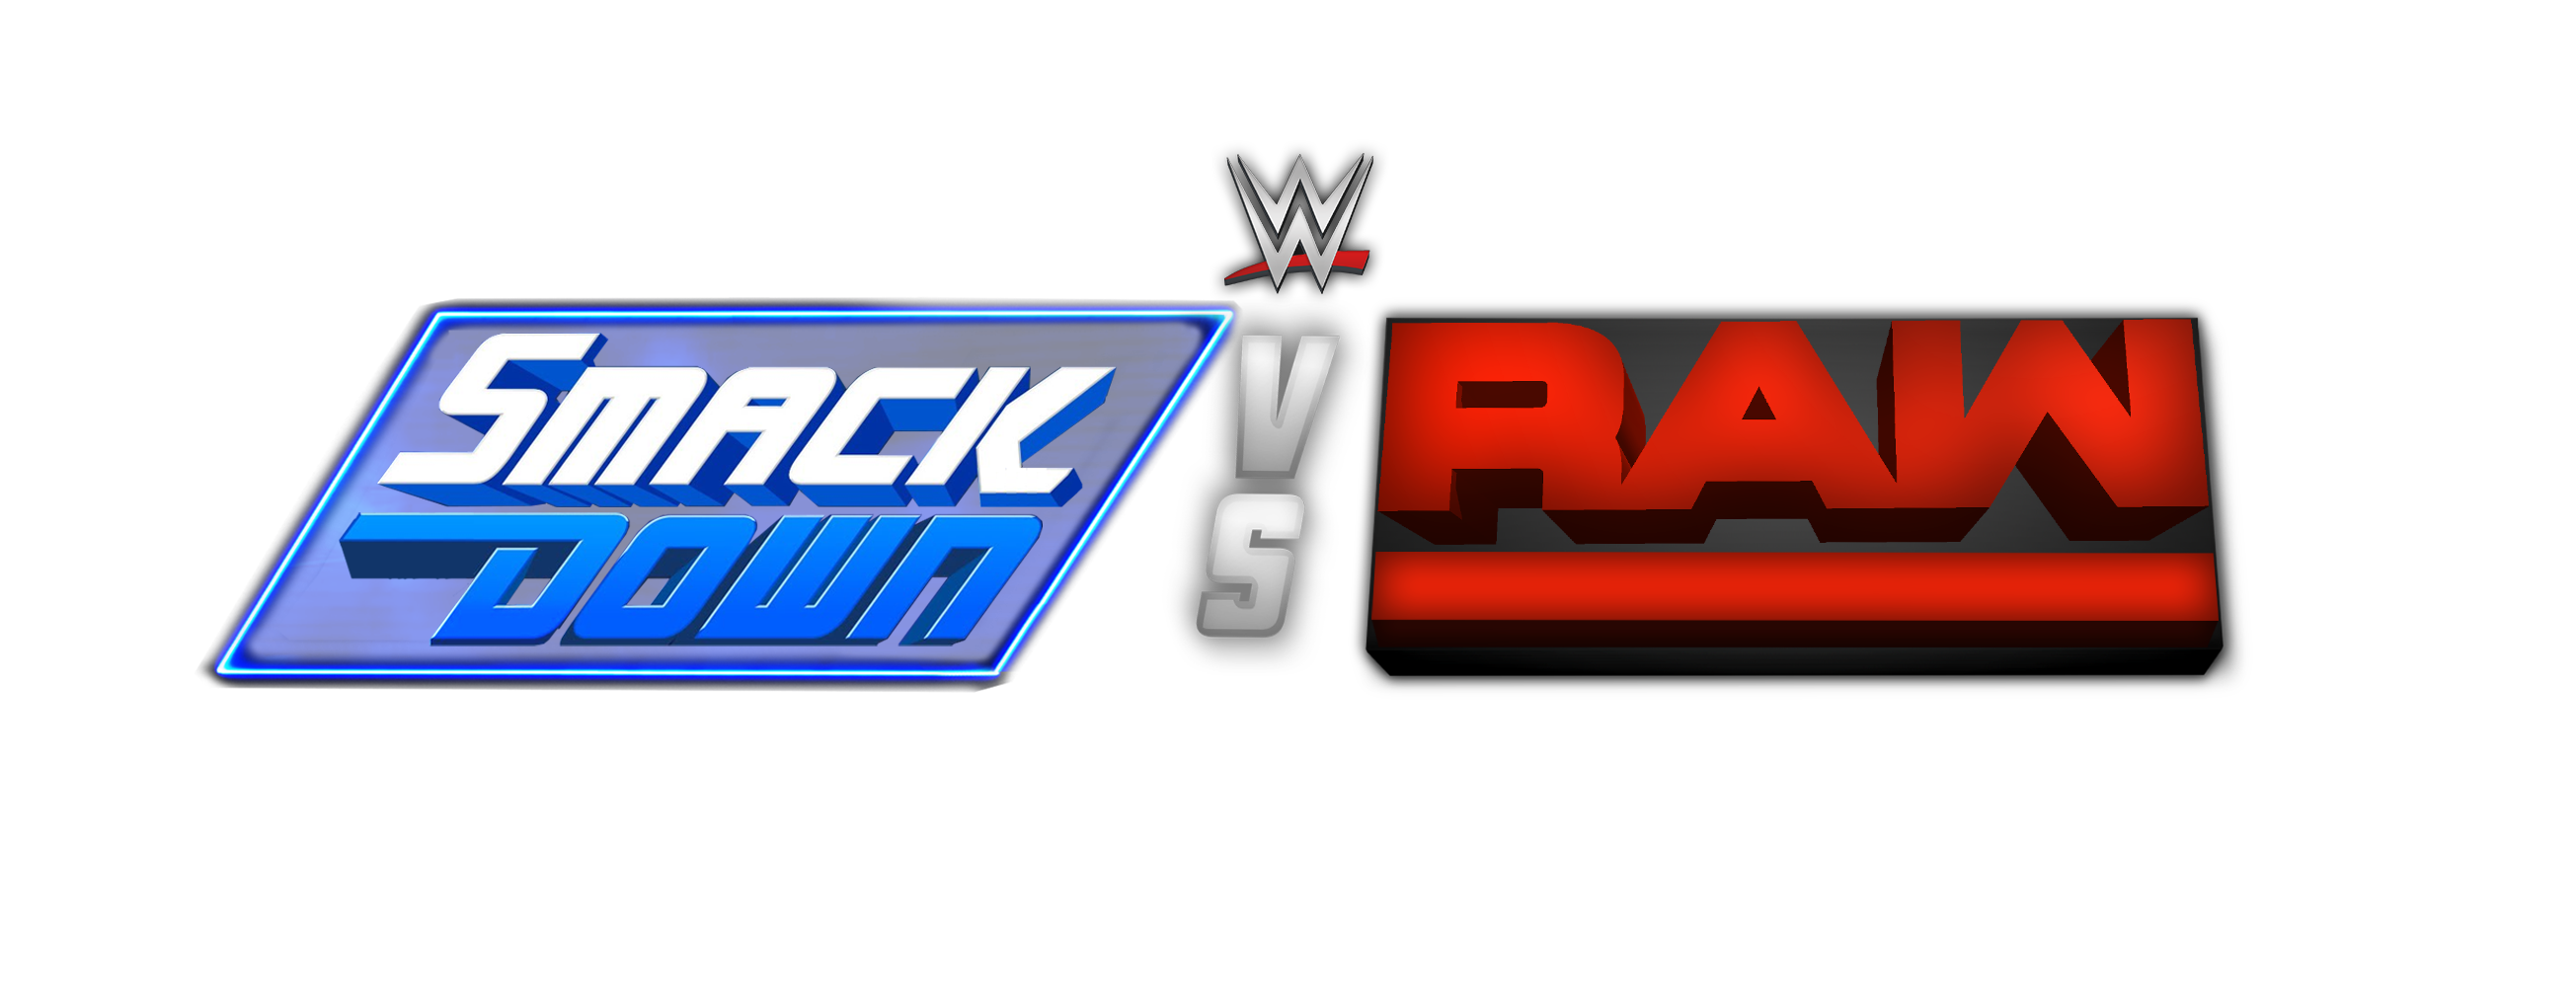 New WWE RAW Logo cut by Matti